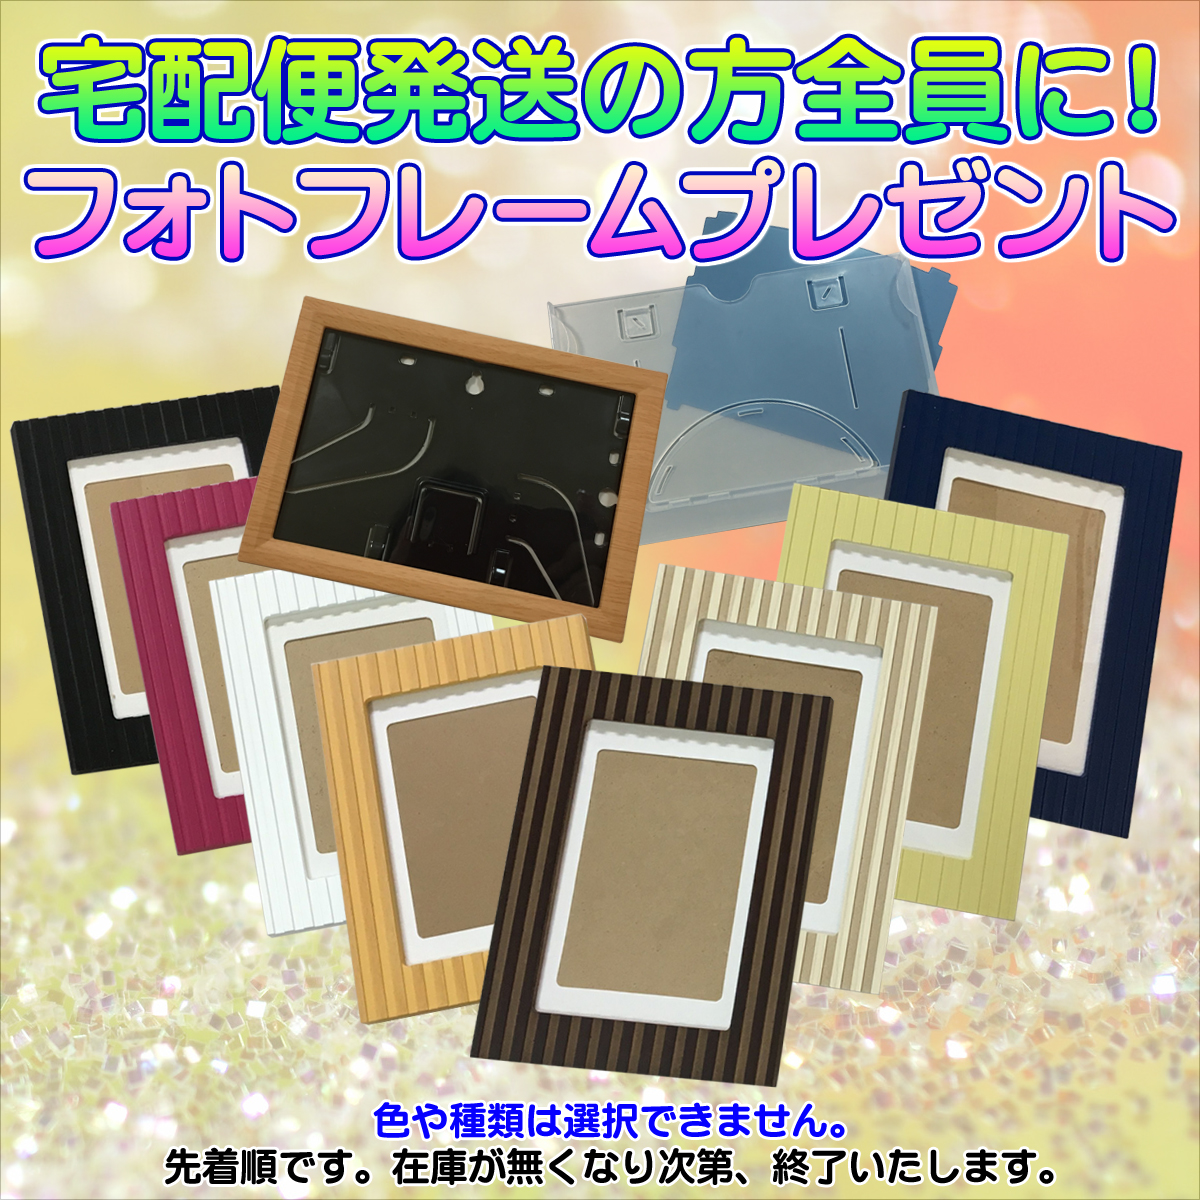 http://photo-cross.jp/abc/framespre_square.jpg